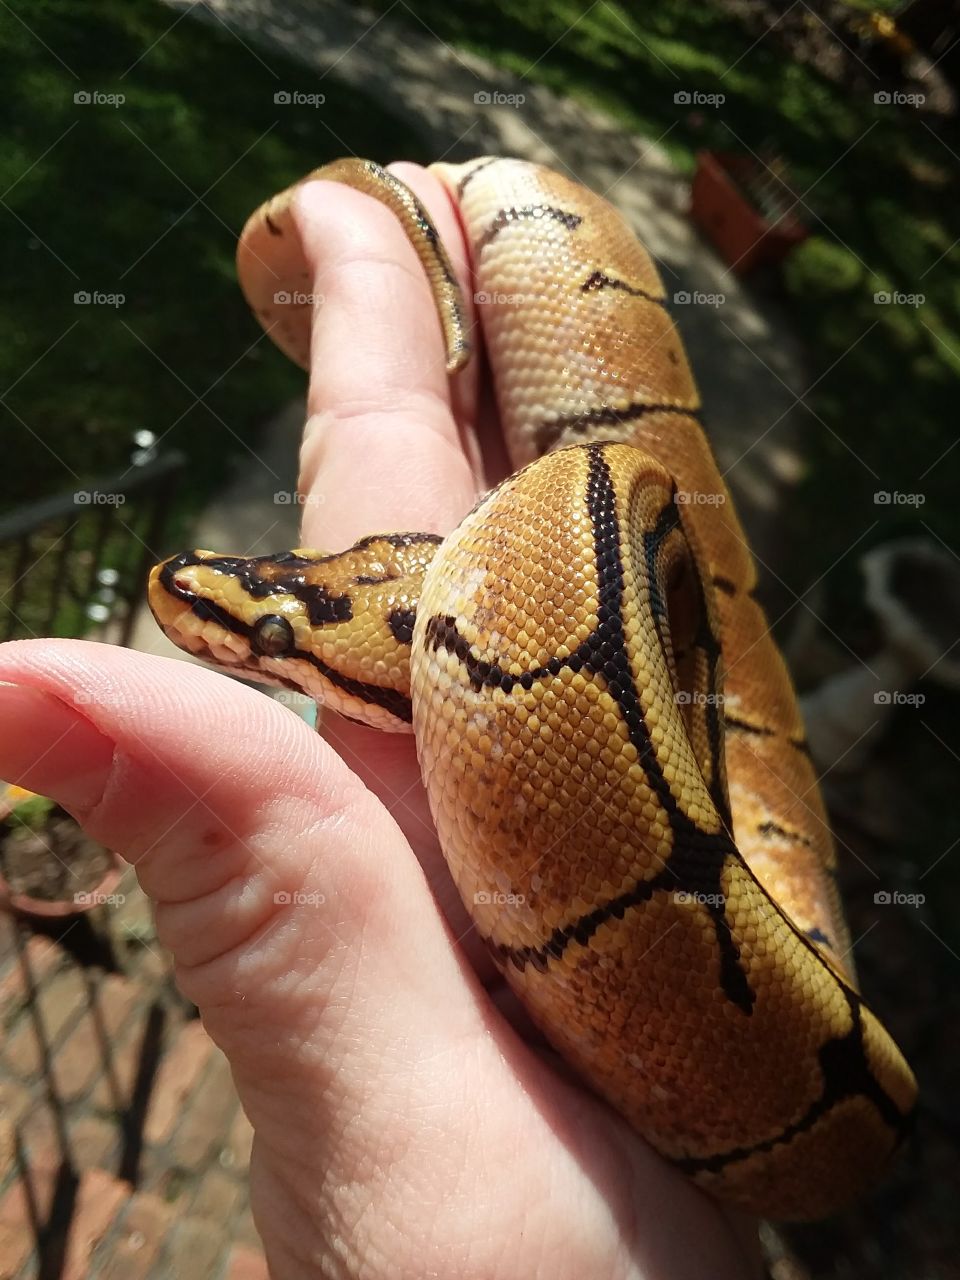 sweet baby <3 spider ball python